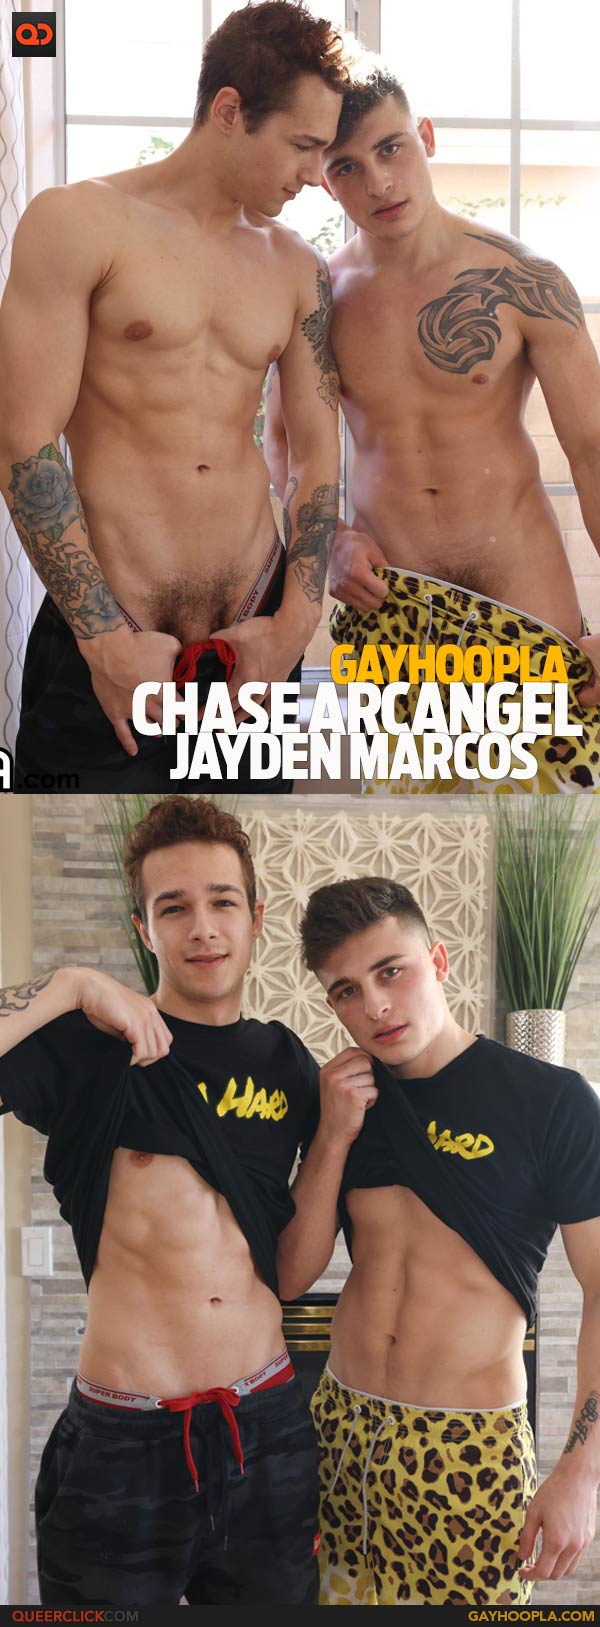 GayHoopla: Chase Arcangel and Jayden Marcos